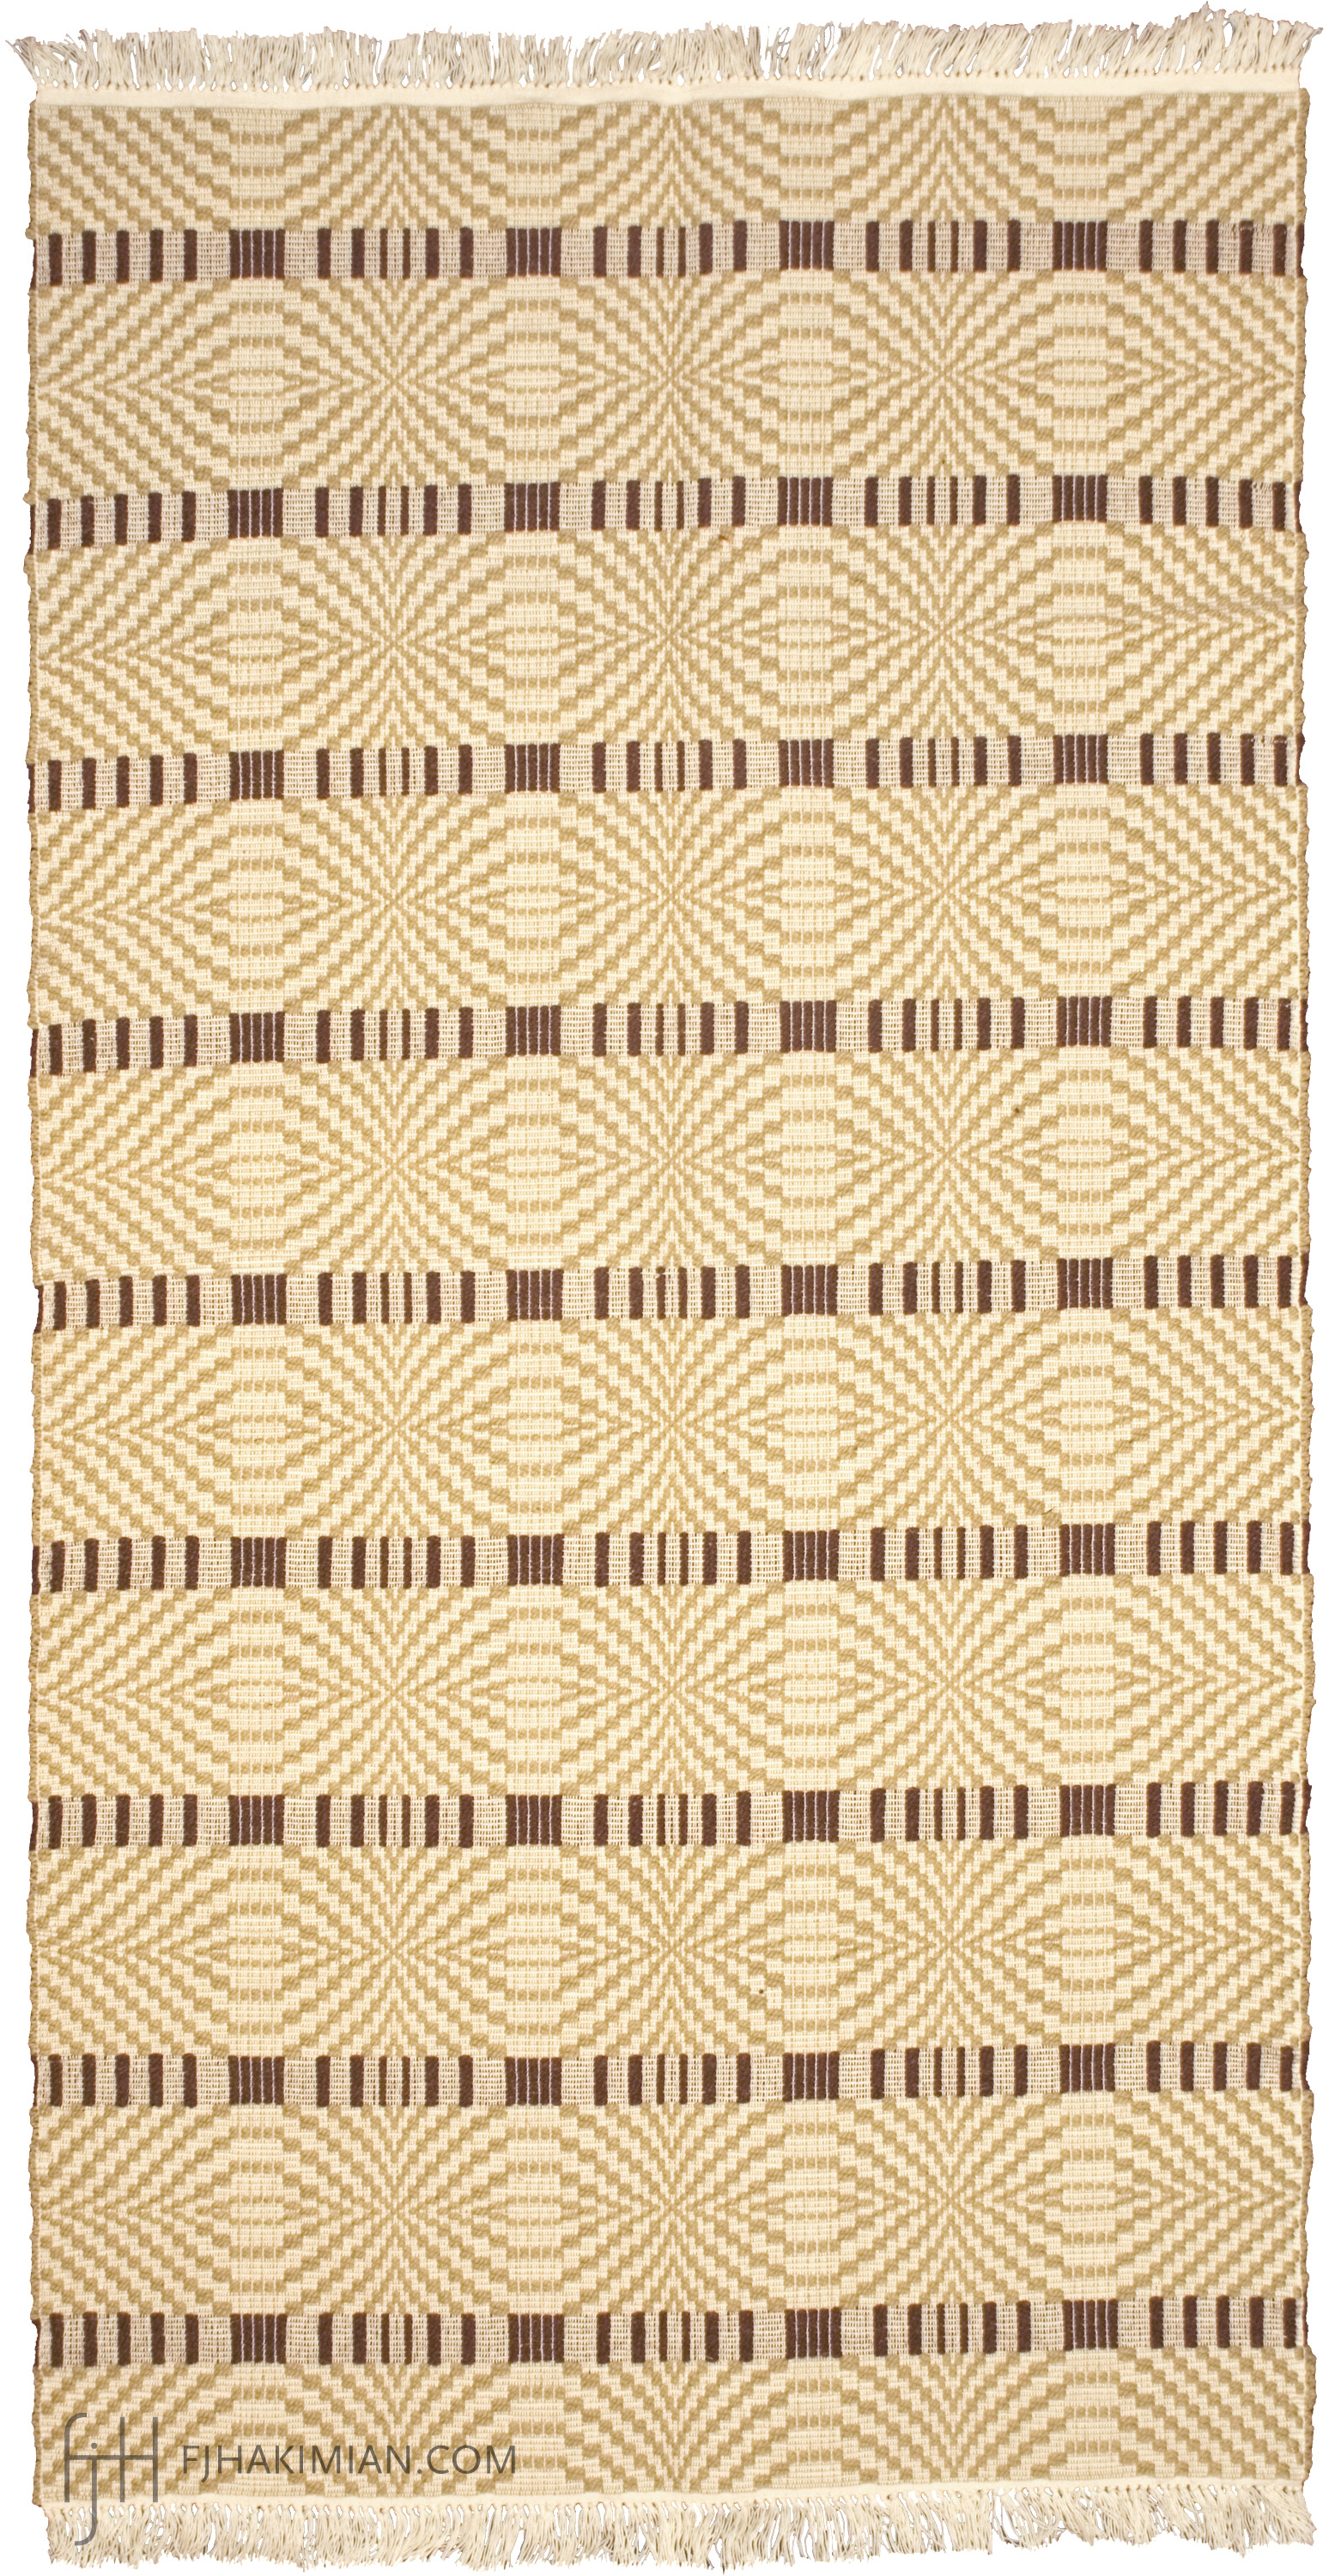 25090 | SIS-102 Design | Custom Sardinian Carpet | FJ Hakimian | Carpet Gallery in NYC